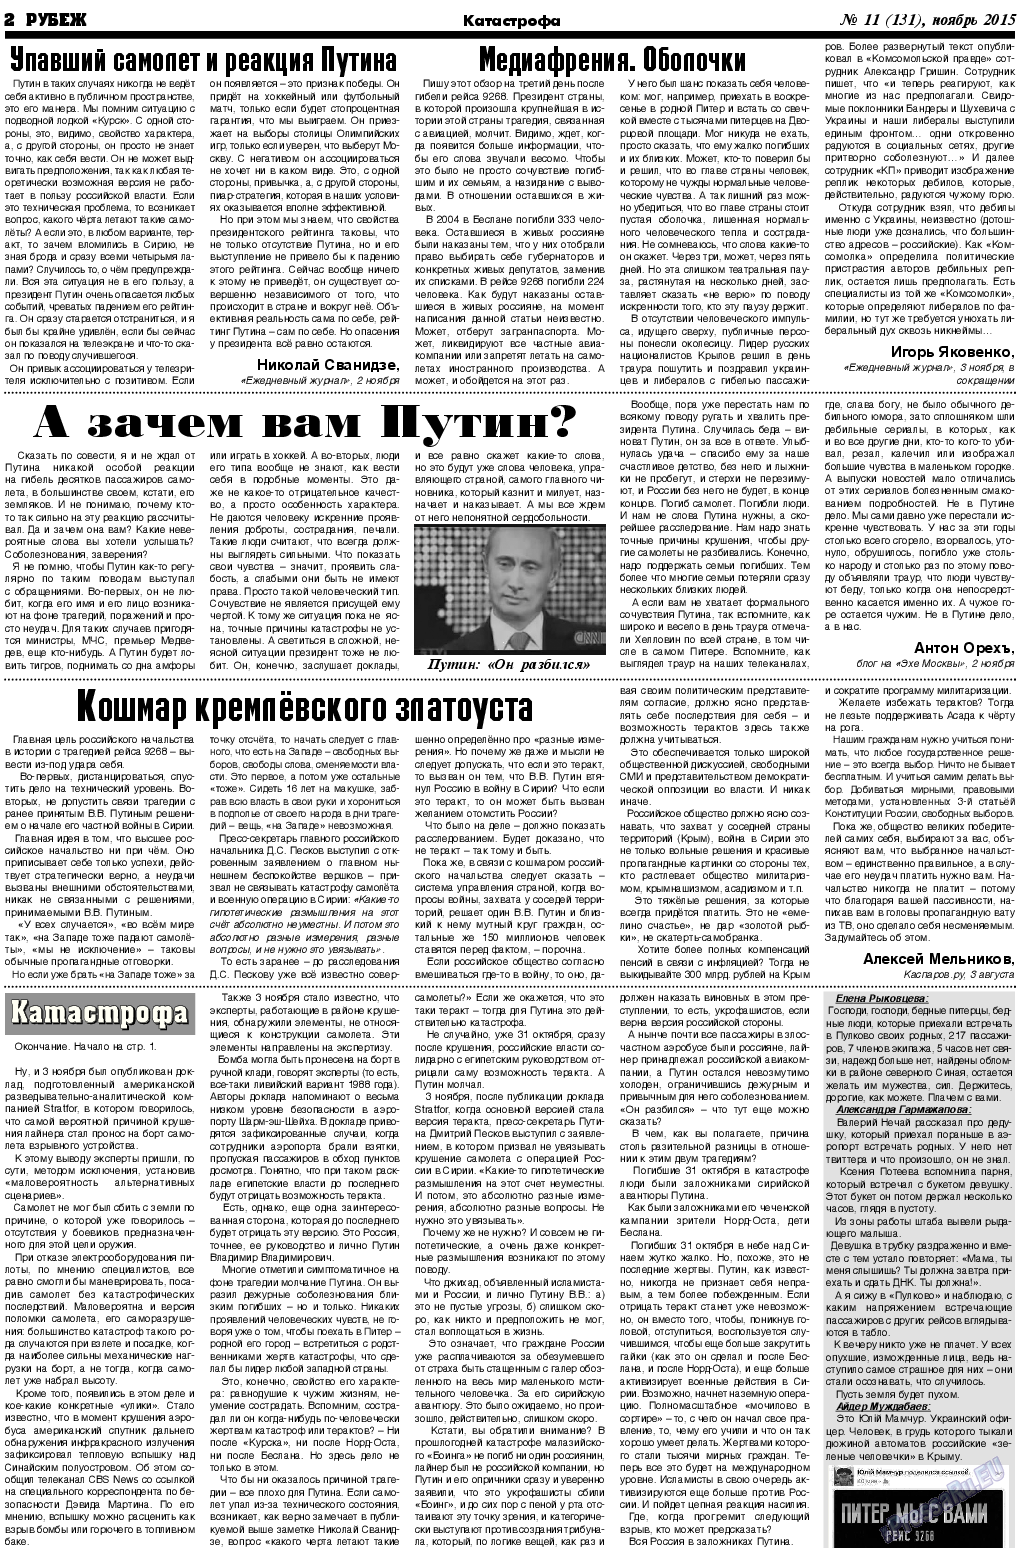 Рубеж, газета. 2015 №11 стр.2